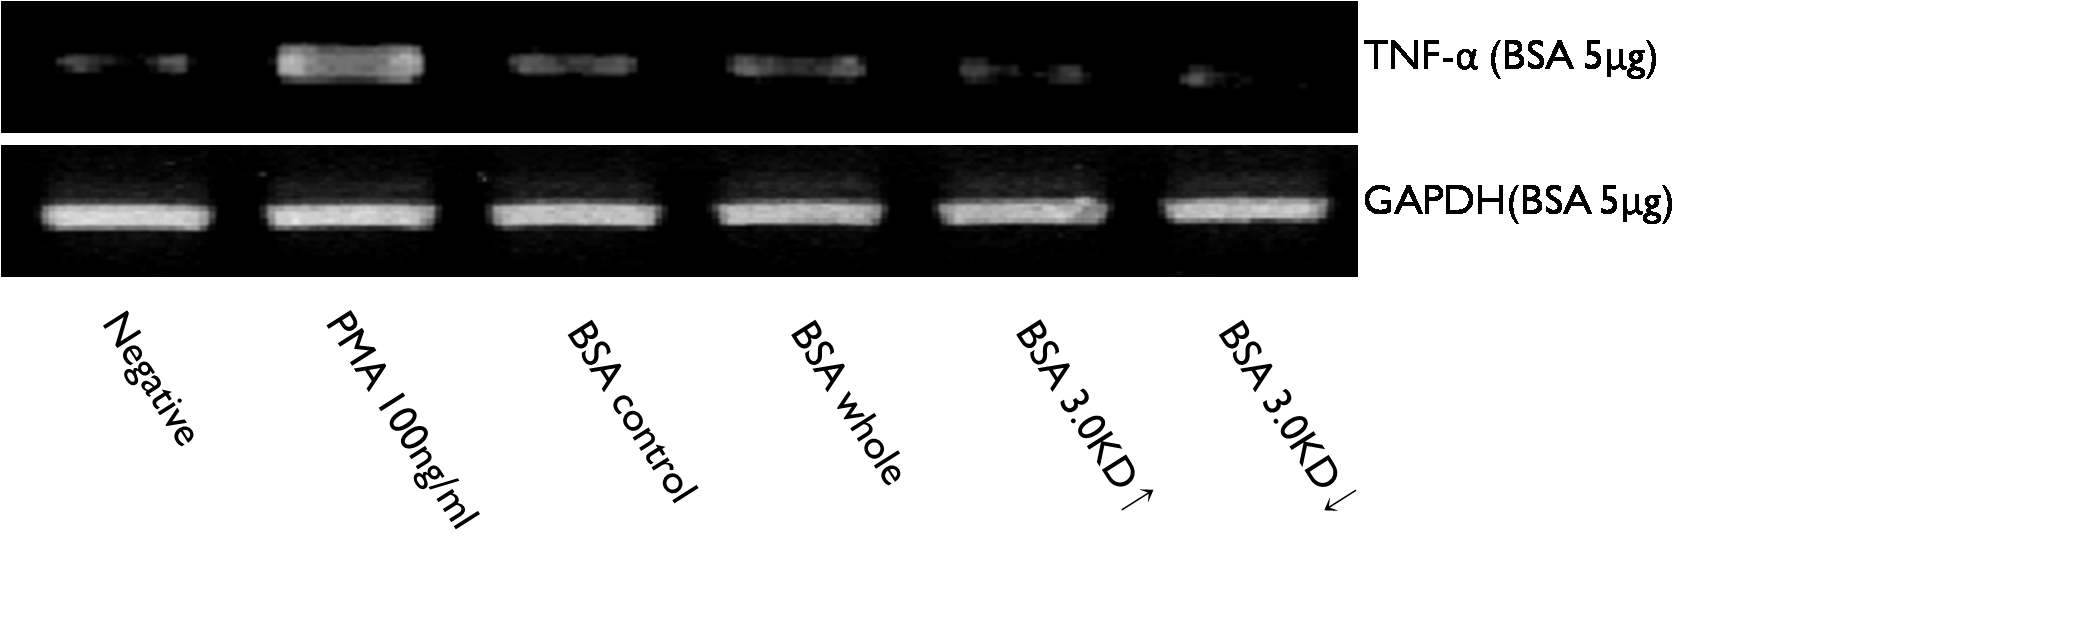 HMC-1 cell에 BSA를 5μg 처리하였을 경우 발현되는 TNF-α.